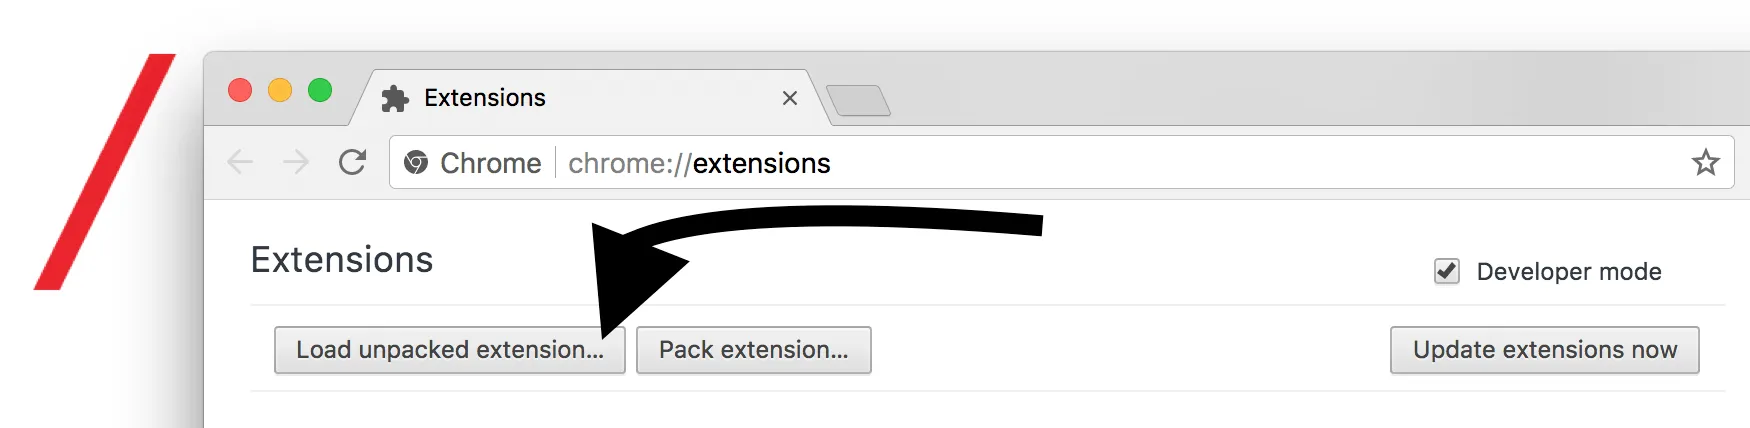 unpacked google chrome extension" caption="Load unpacked google chrome extension